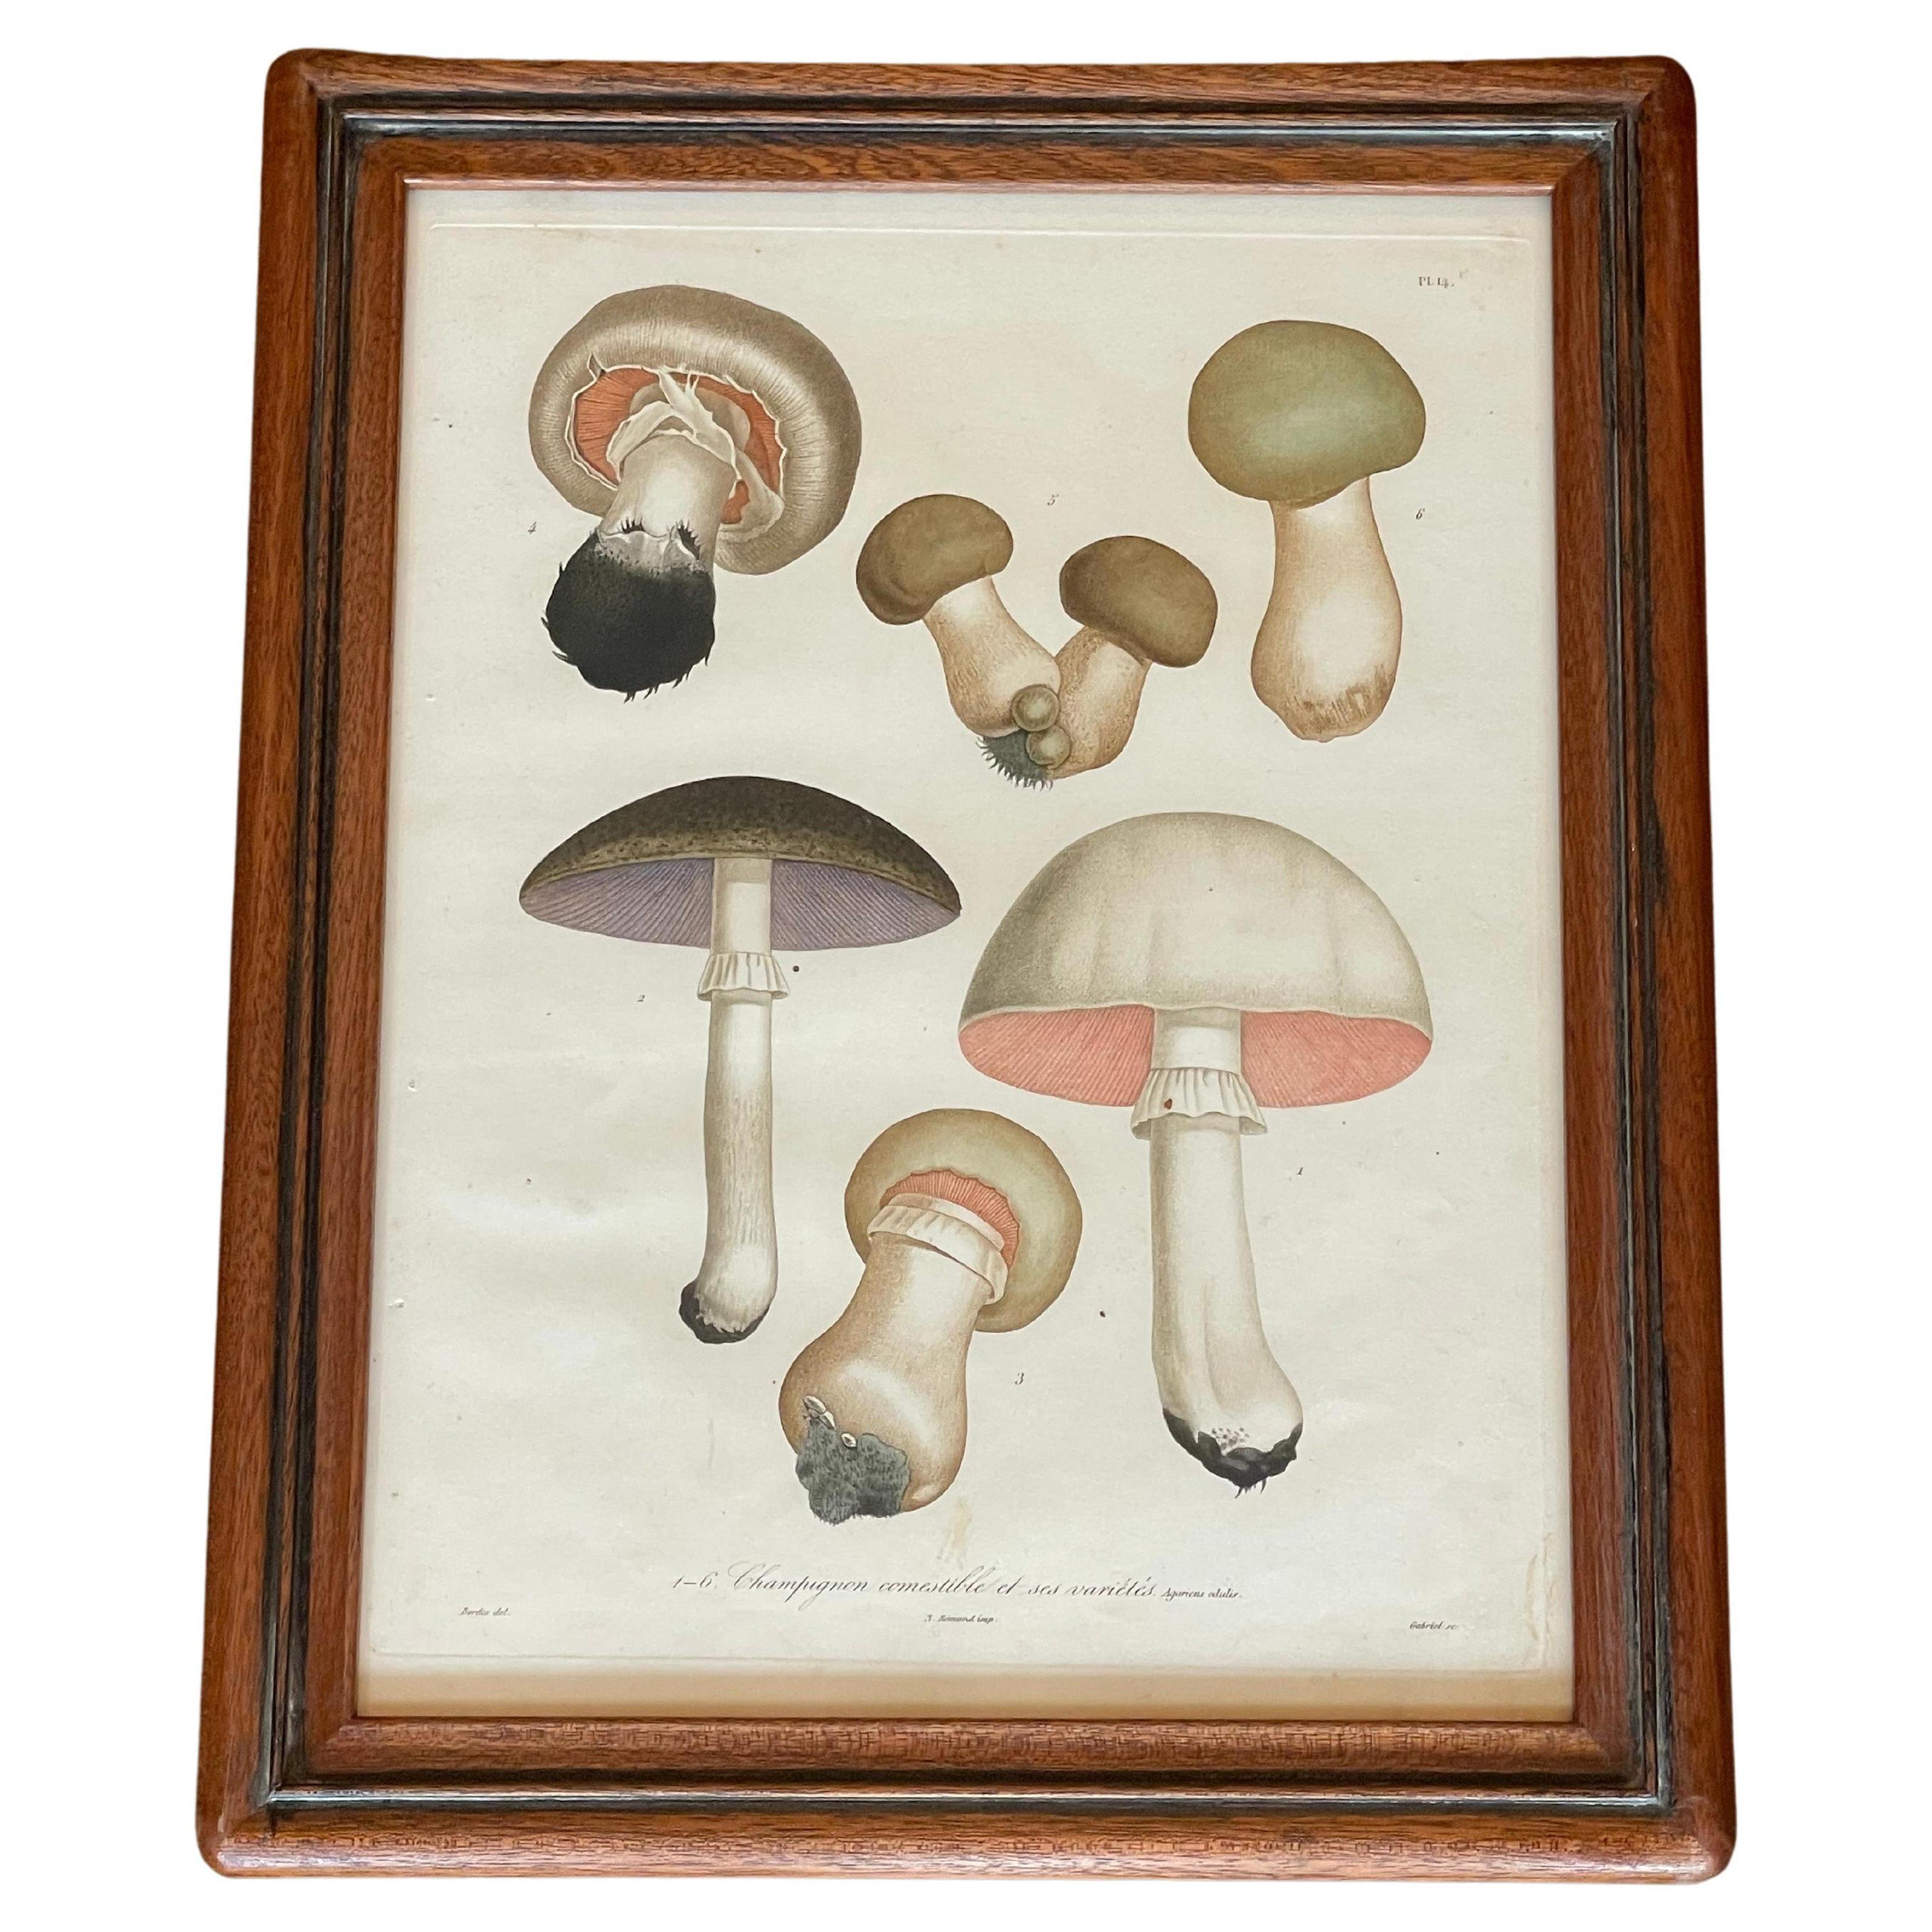 Engraved Set of 19th Century Mushroom Mezzo Prints by Joseph Roques